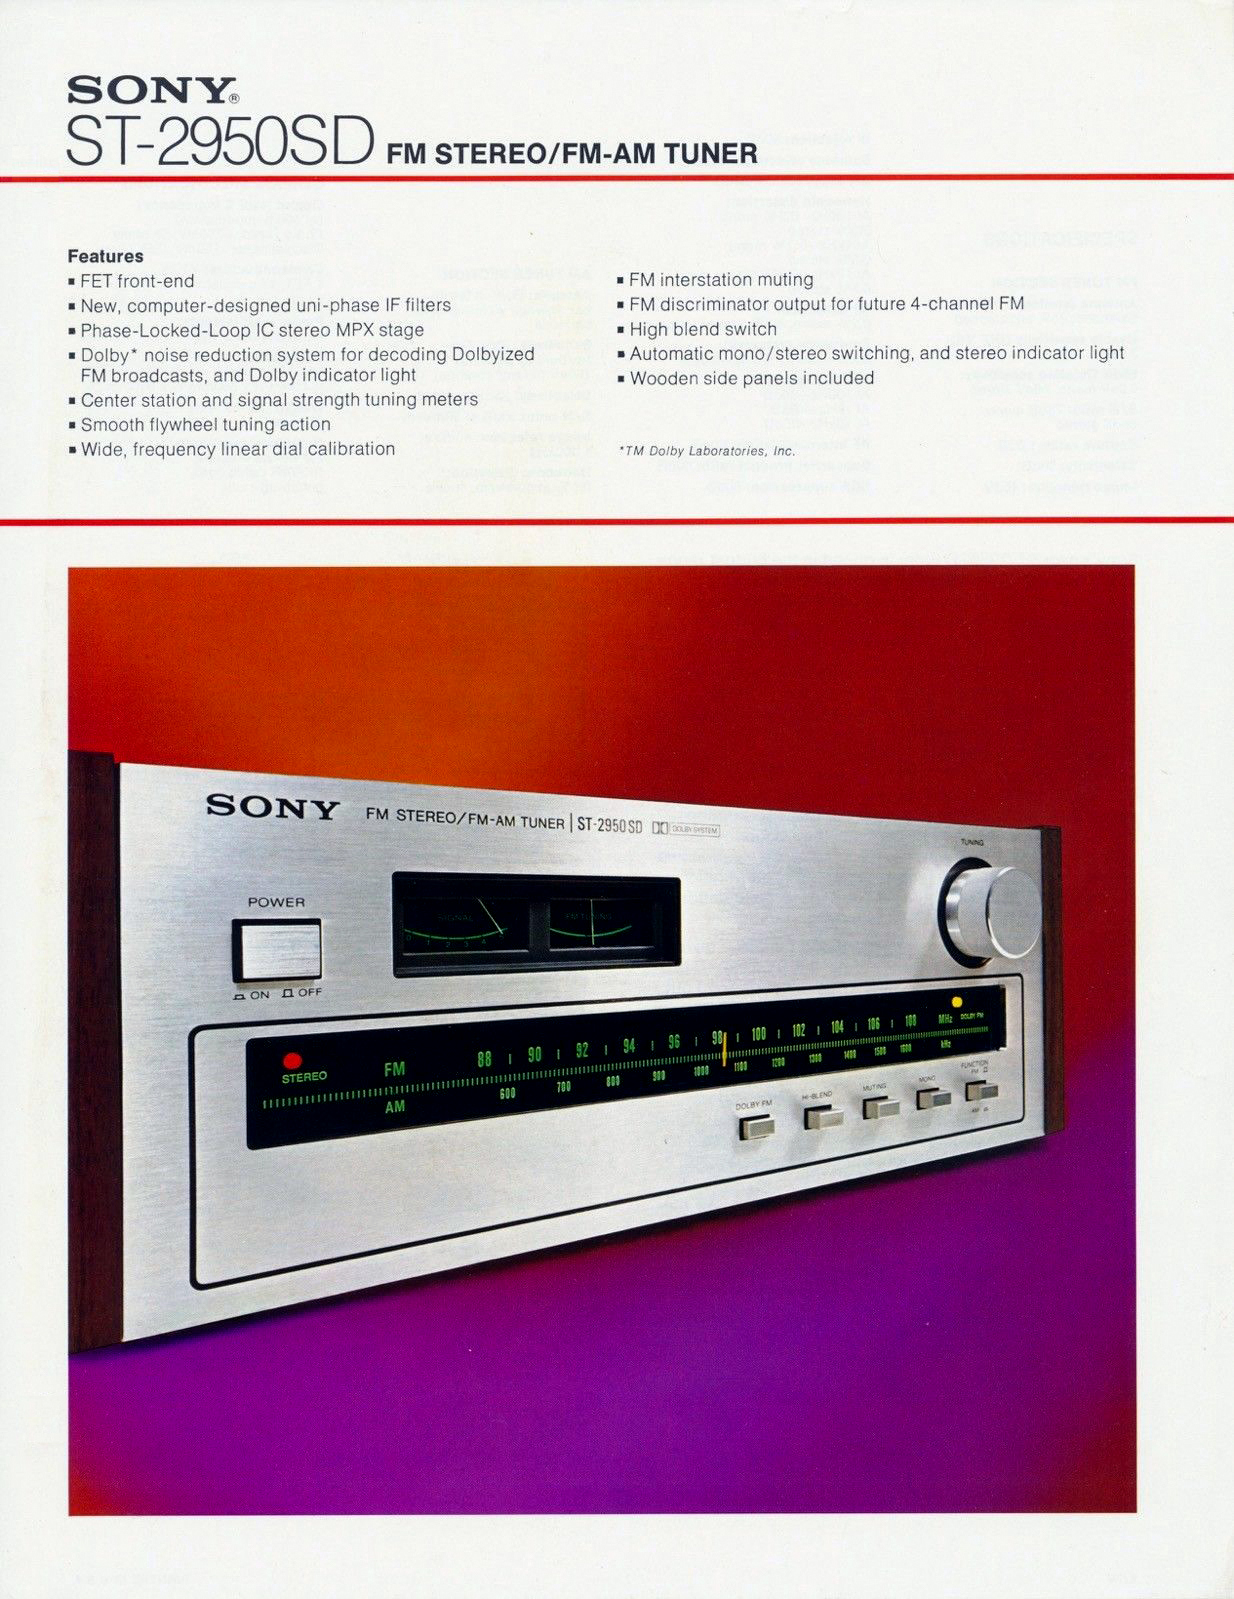 Sony ST-2950 SD-Prospekt-1.jpg